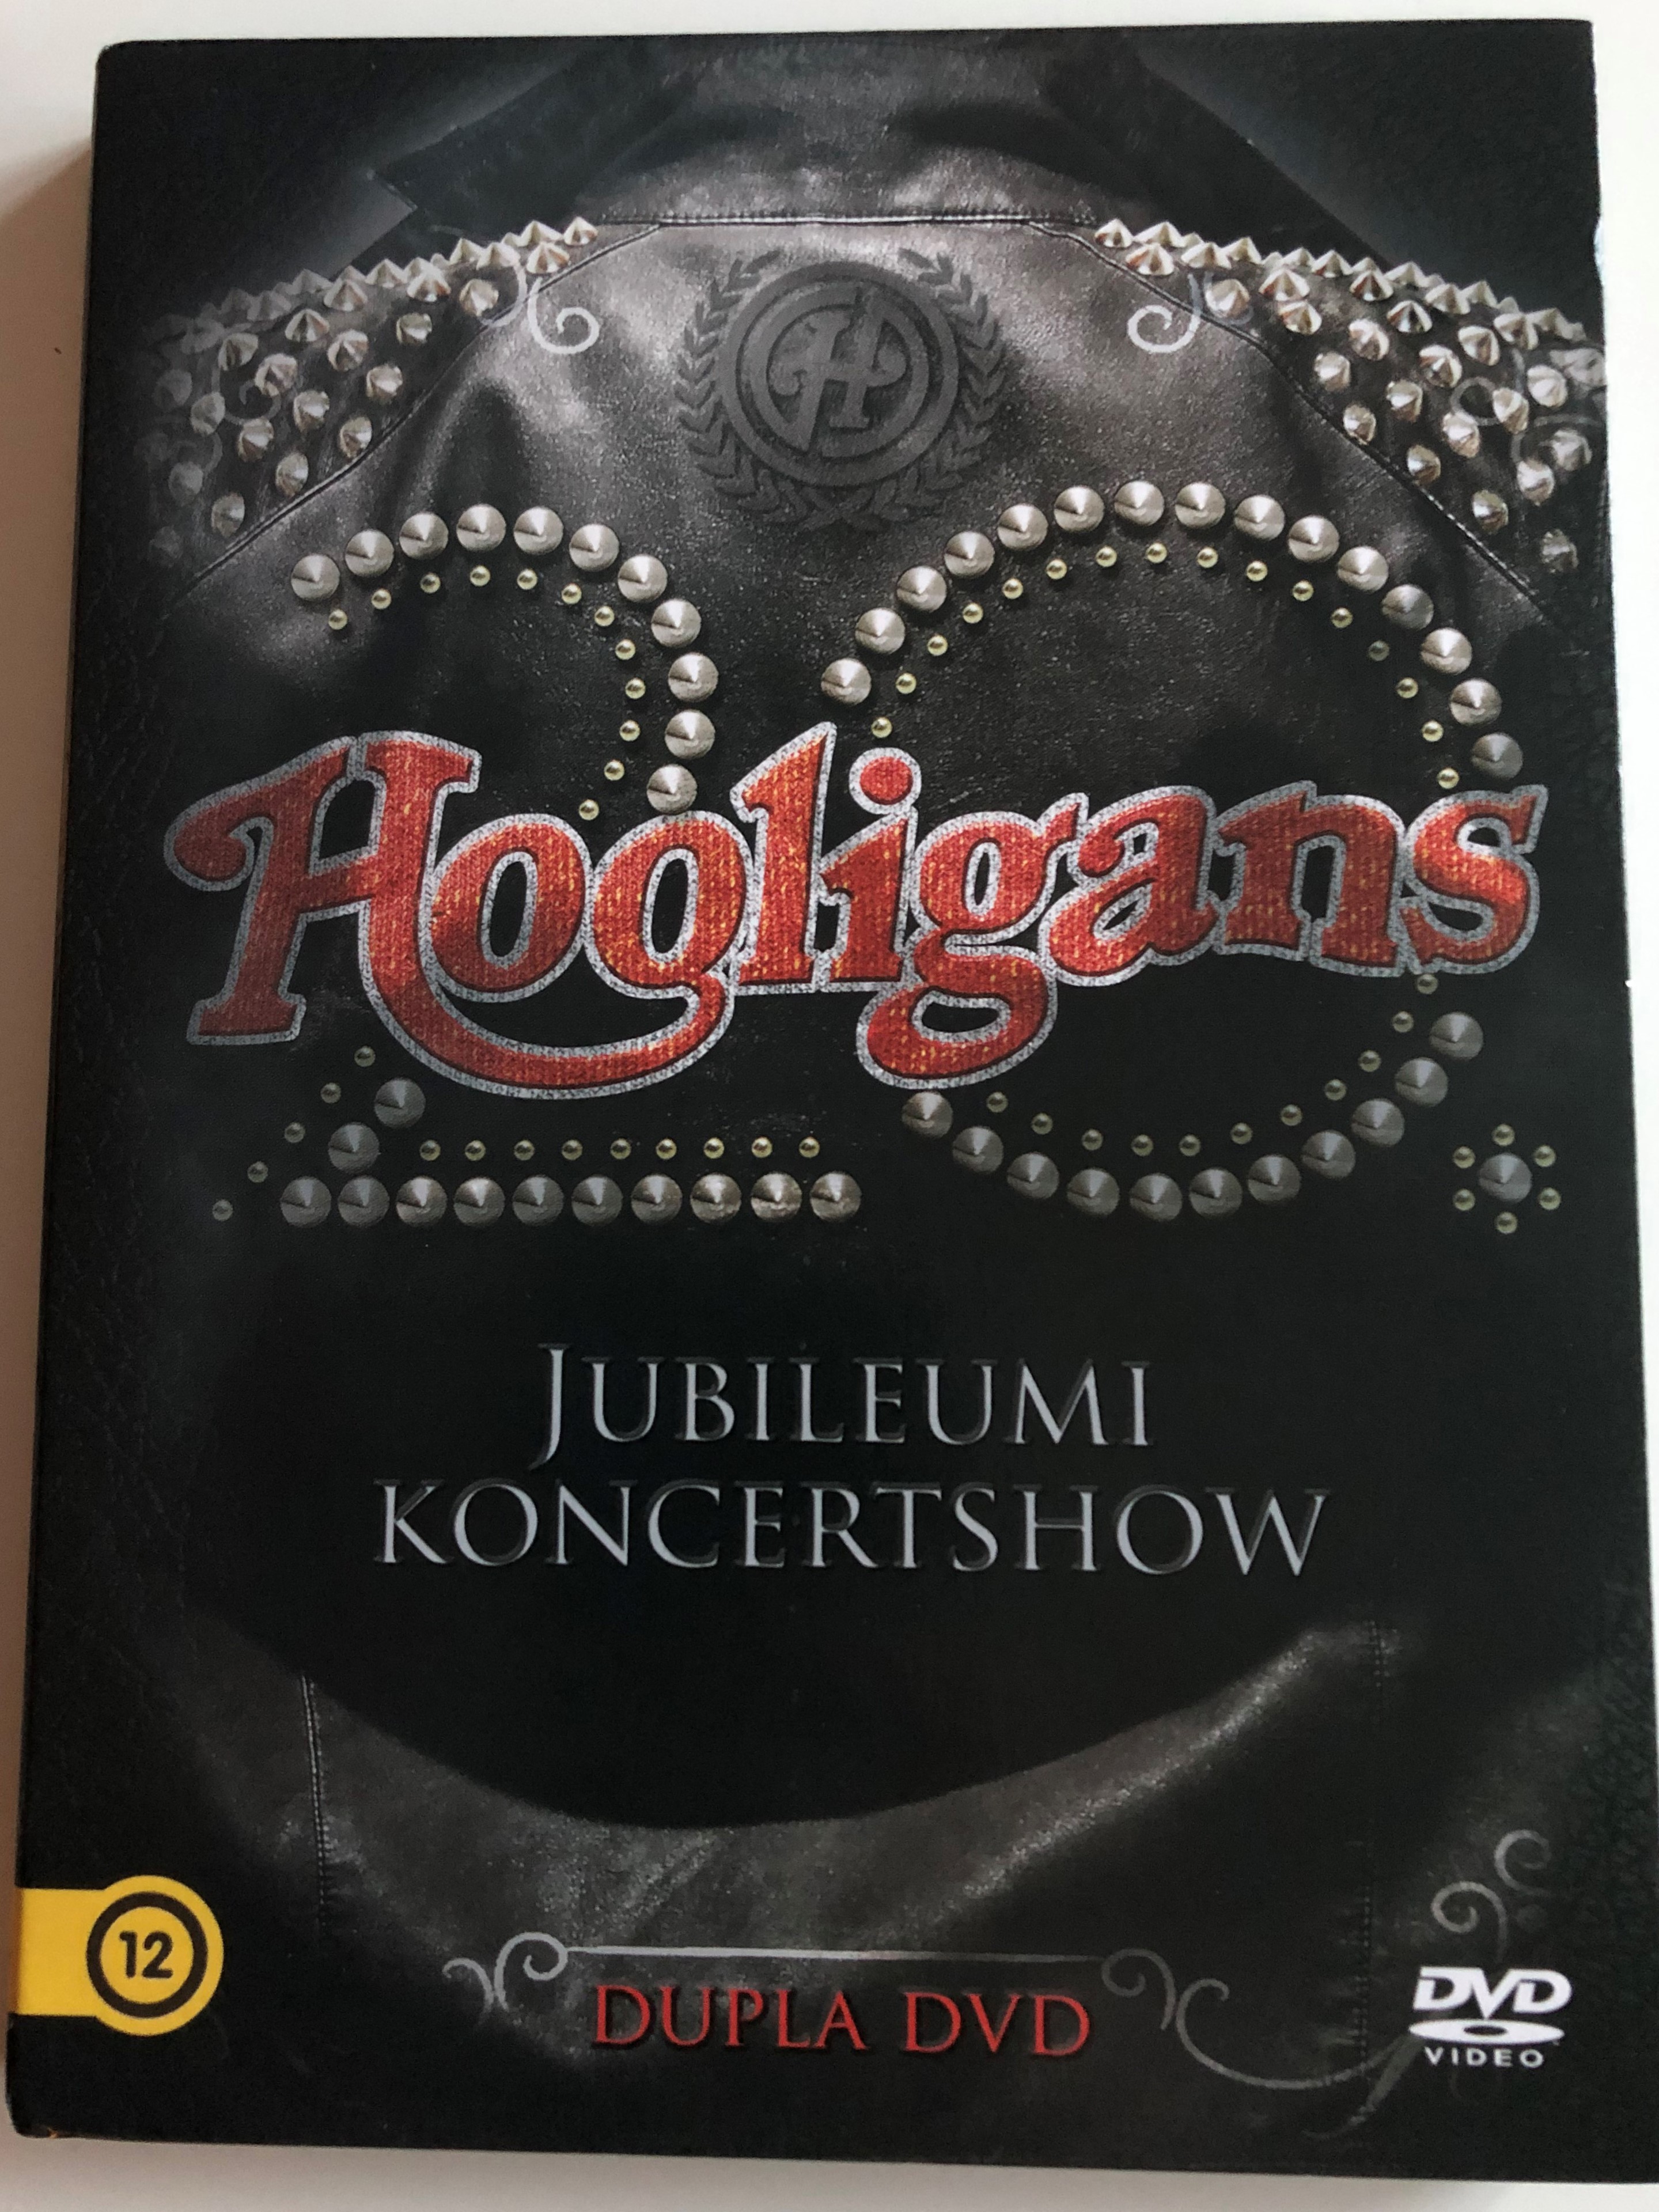 Hooligans 20th Anniversary 2xDVD 2017 Jubielumi KoncertShow  1.JPG